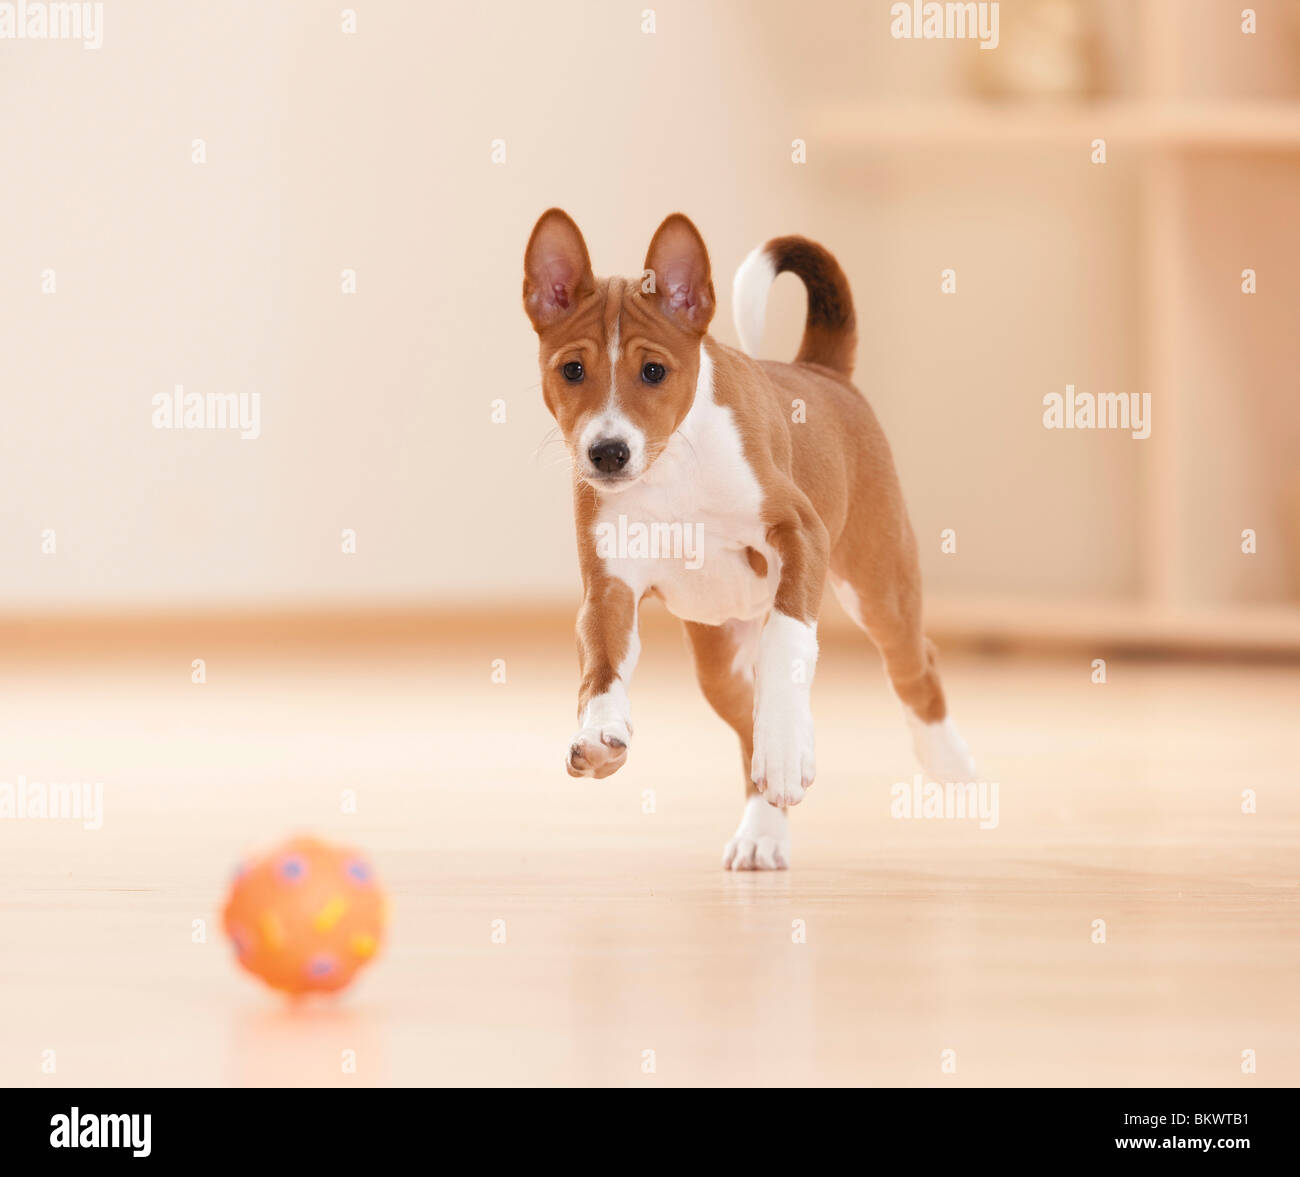 Basenji dog puppy toy Stock Photo - Alamy